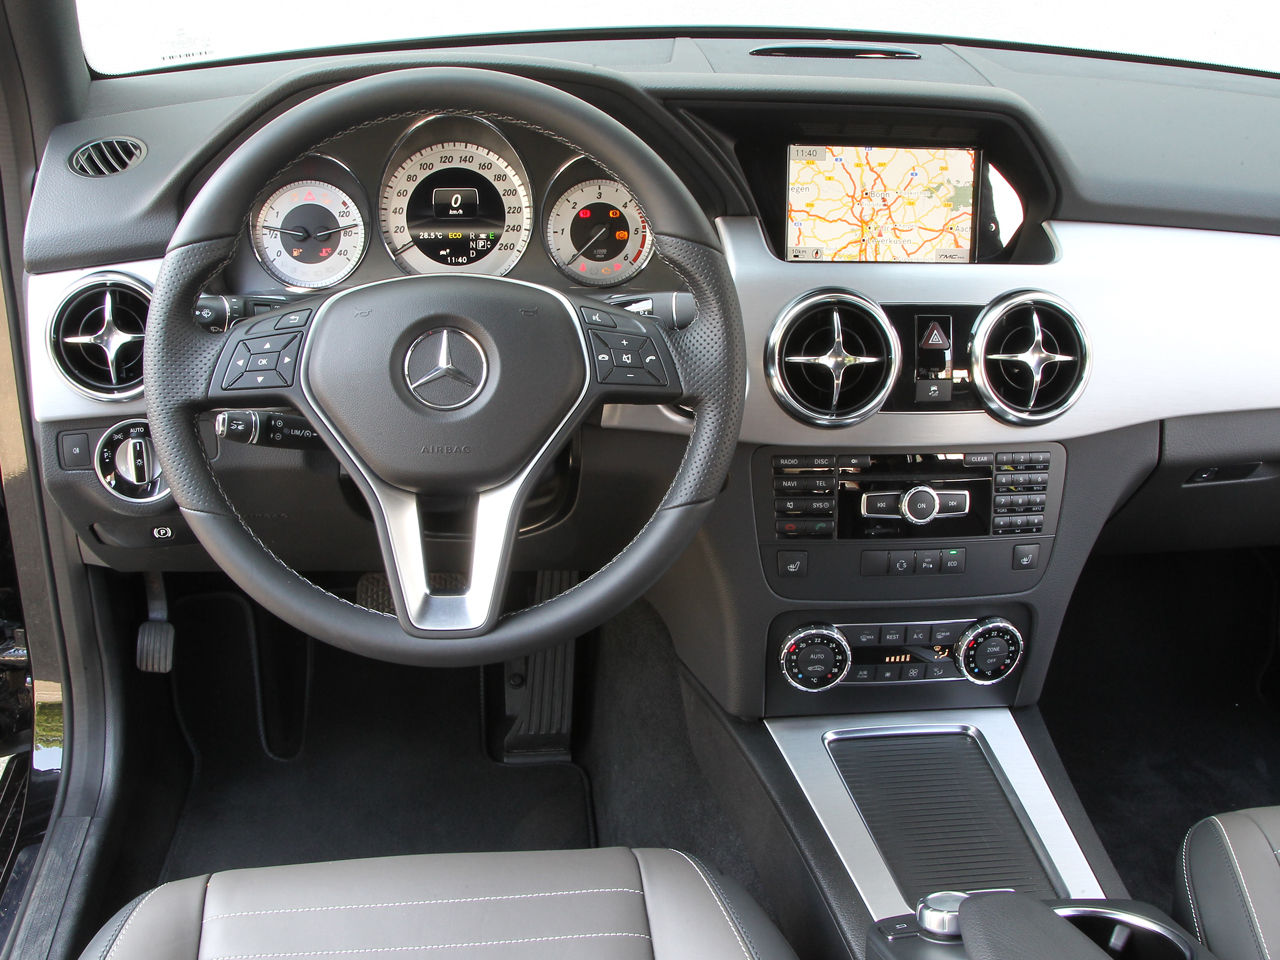 Mercedes Glk 350 Cdi 4matic 2012 Im Test Autozeitung De